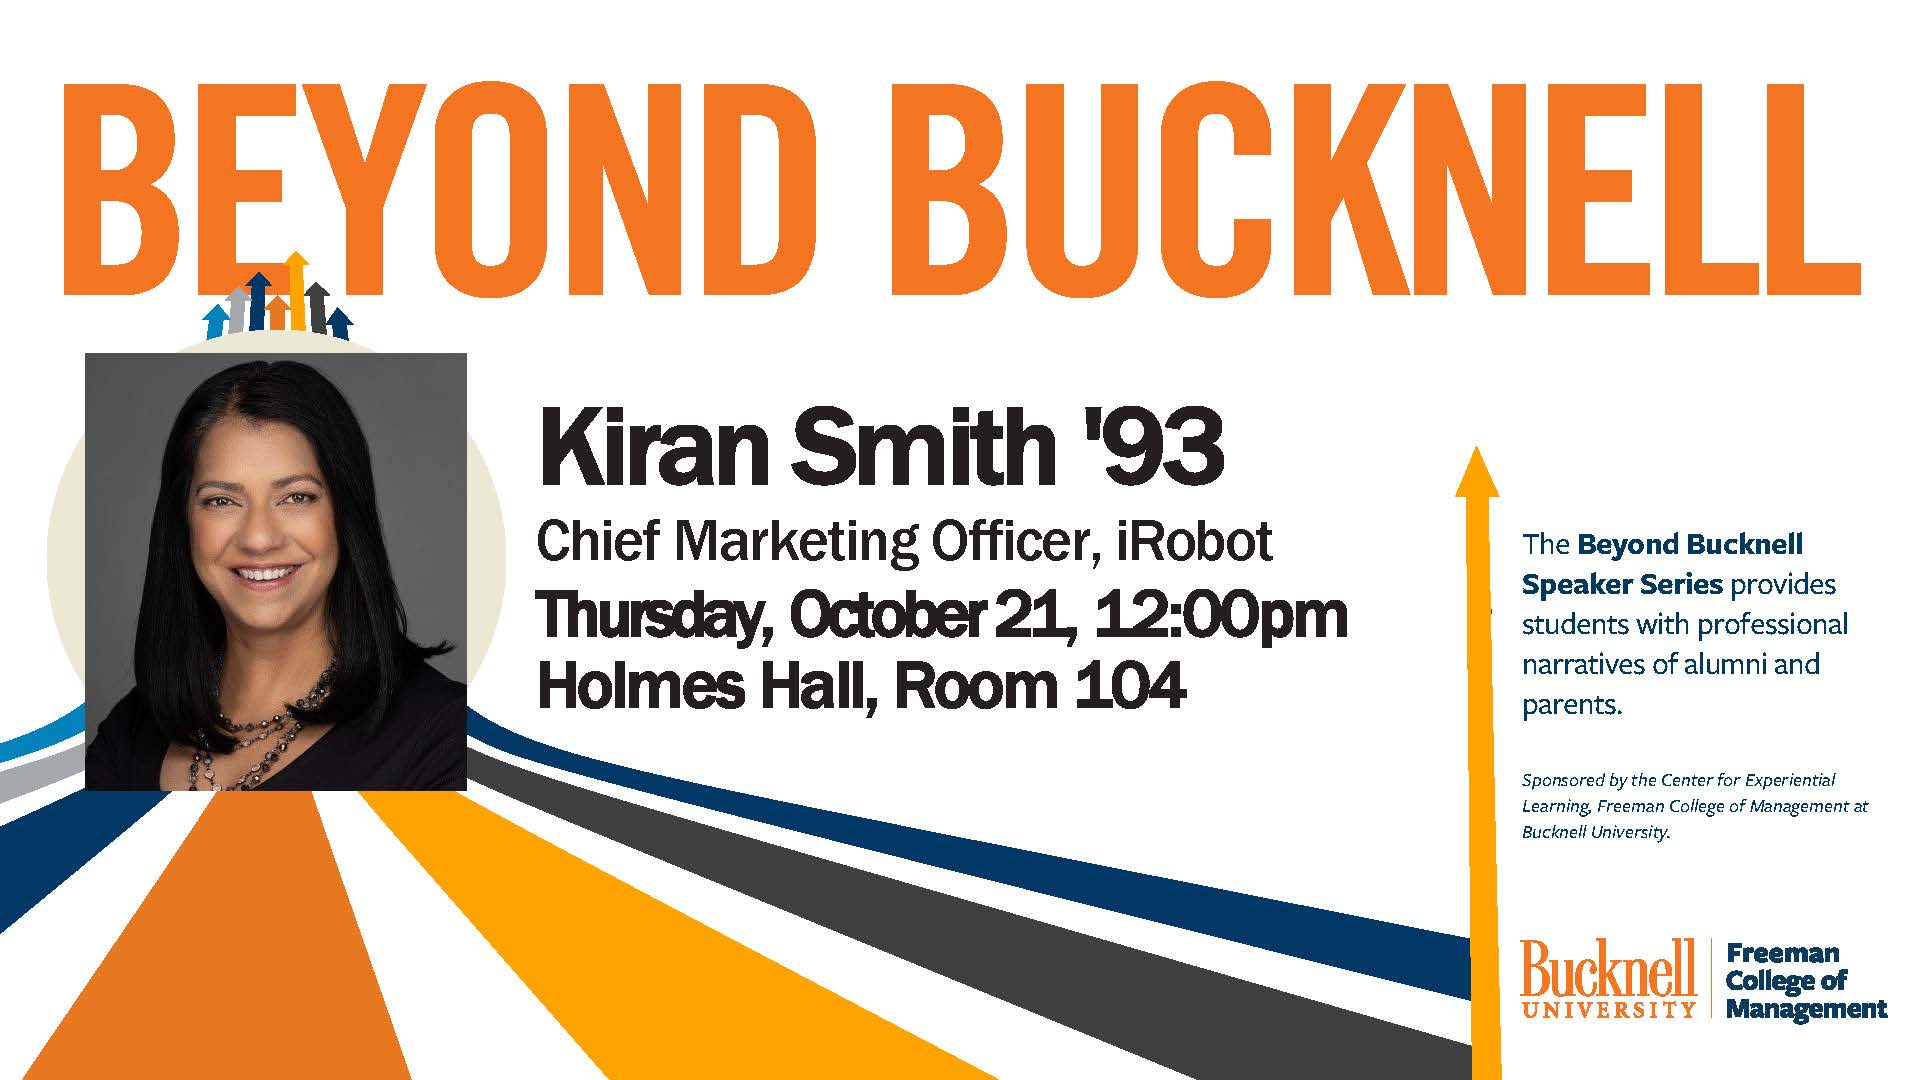 Beyond Bucknell Speaker Series presents Kiran Smith ’93; Chief Marketing Officer at iRobot